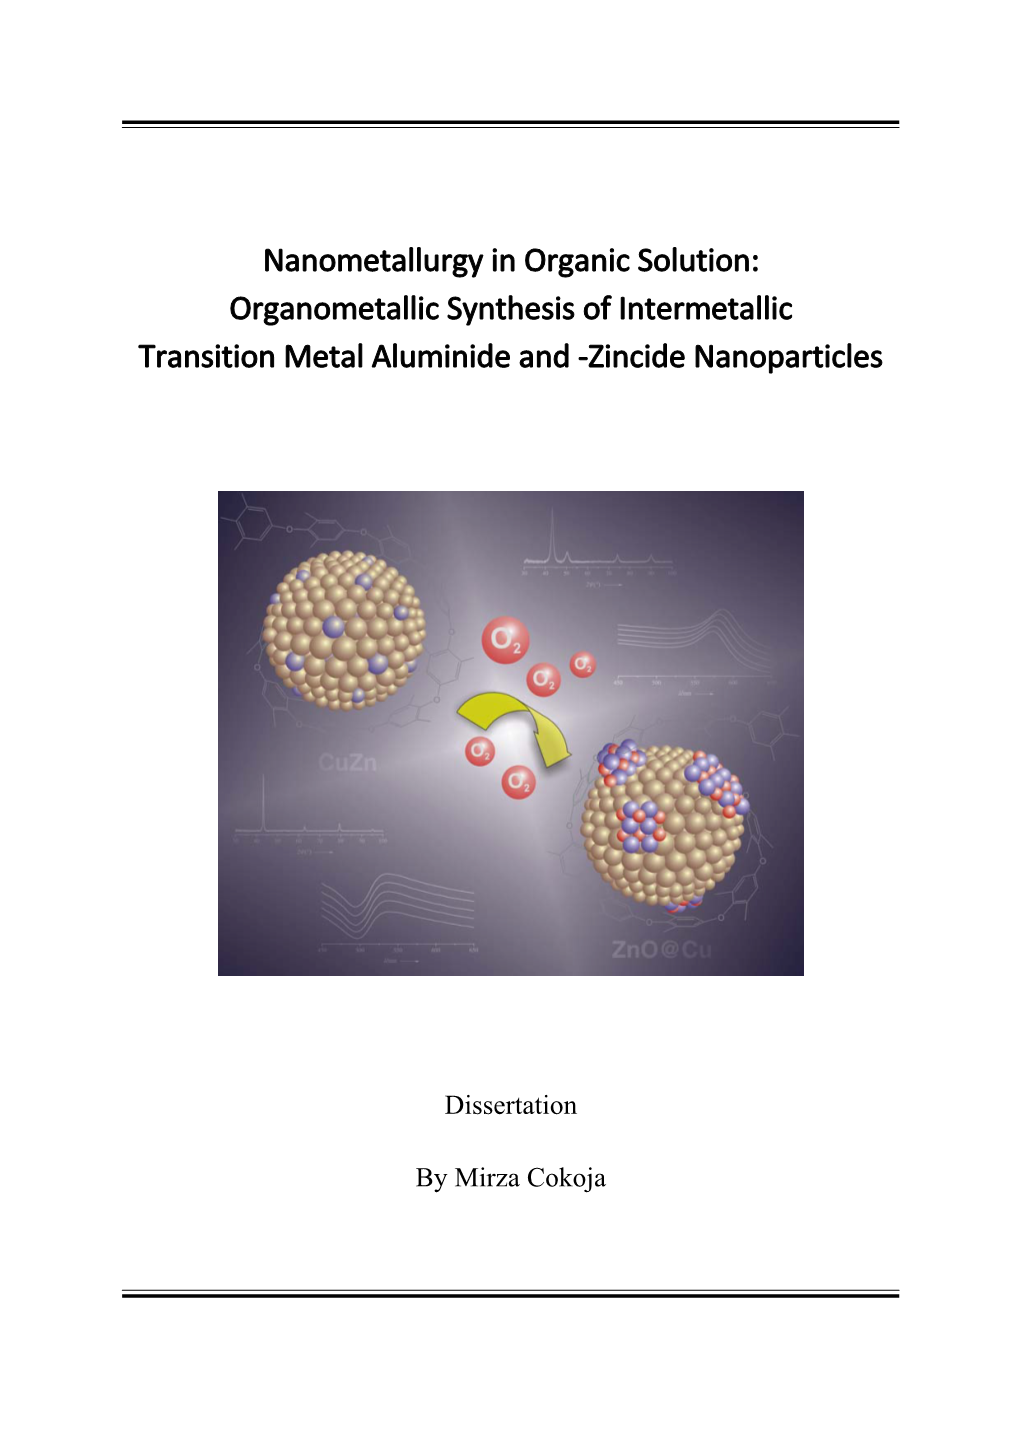 Organometallic Synthesis of Intermetallic Transition Metal Aluminide and ‐Zincide Nanoparticles